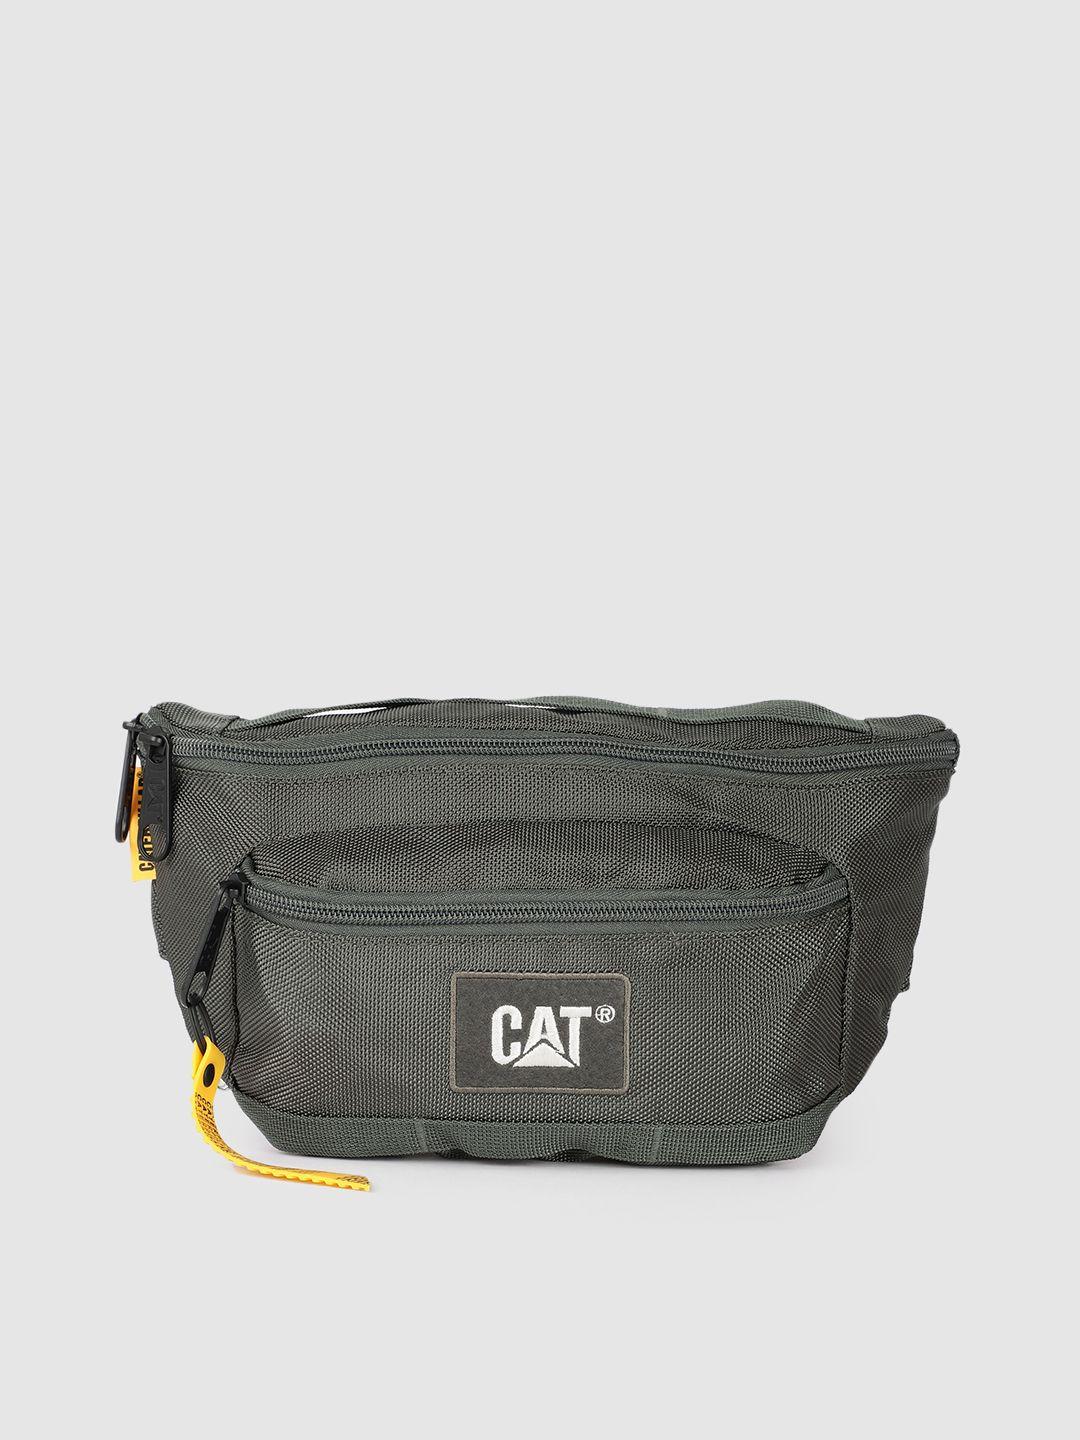 cat-unisex-charcoal-grey-3-liter-waist-pouch